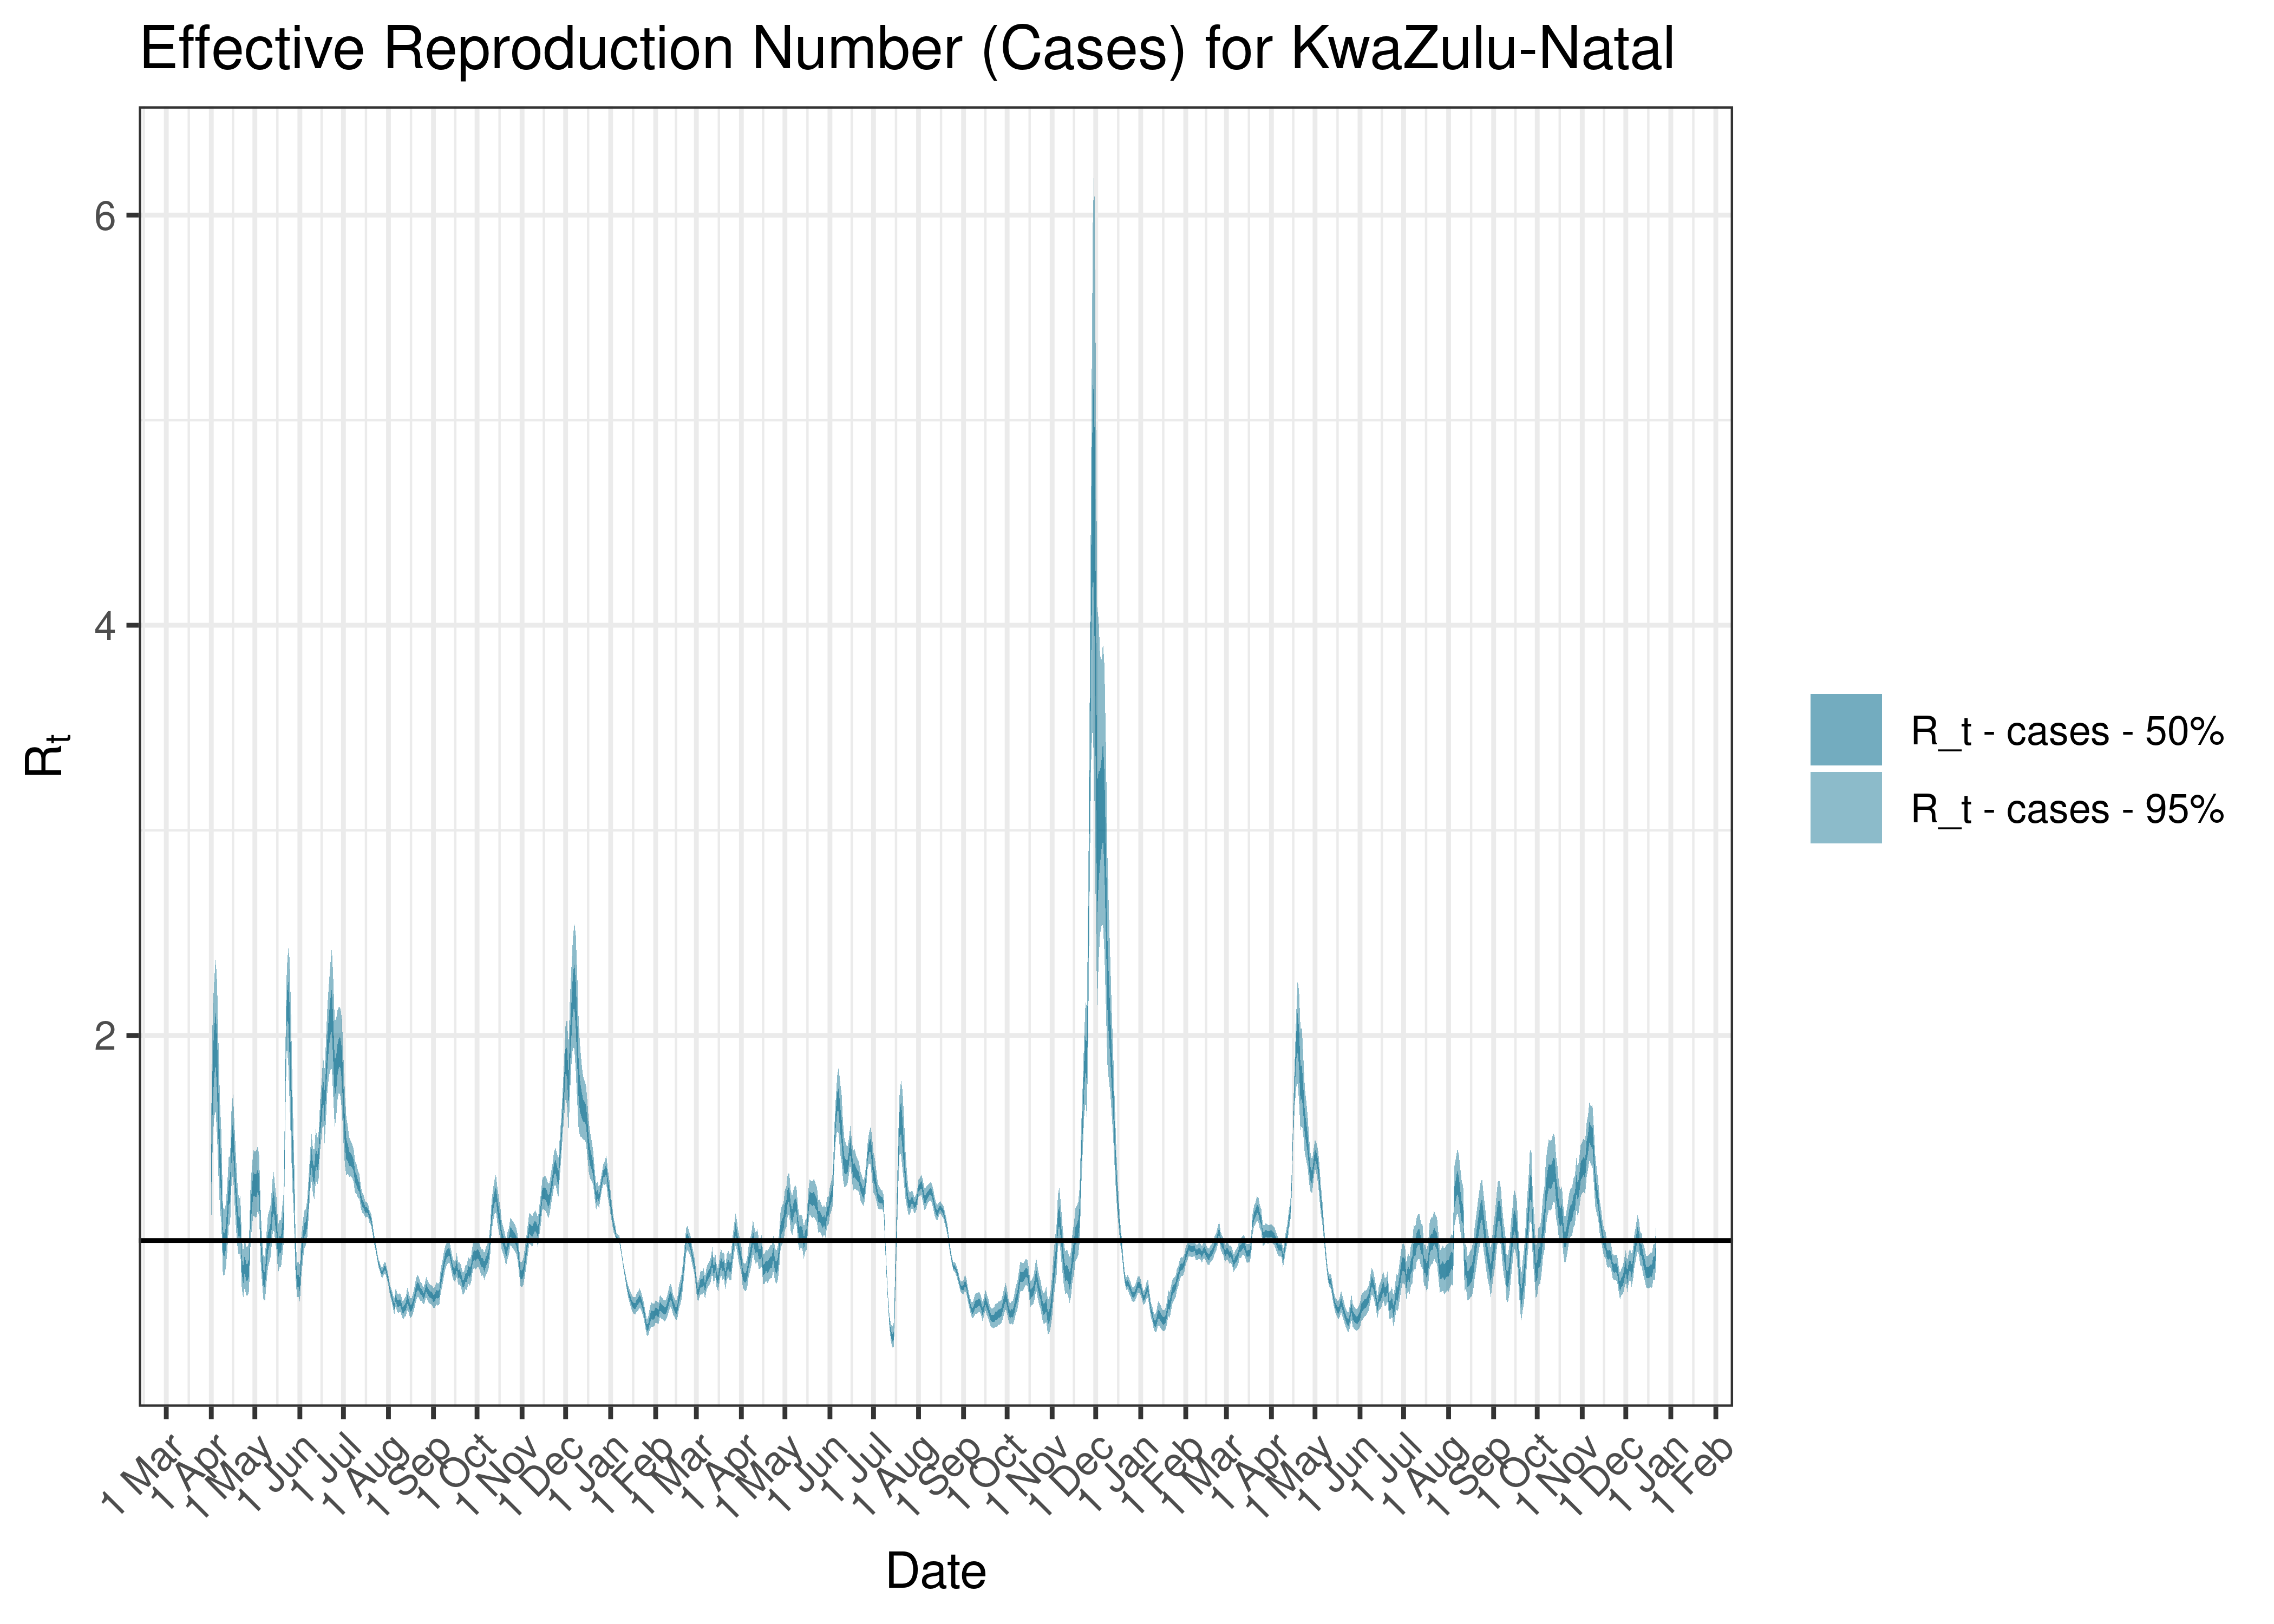 Estimated Effective Reproduction Number Based on Cases for KwaZulu-Natal since 1 April 2020